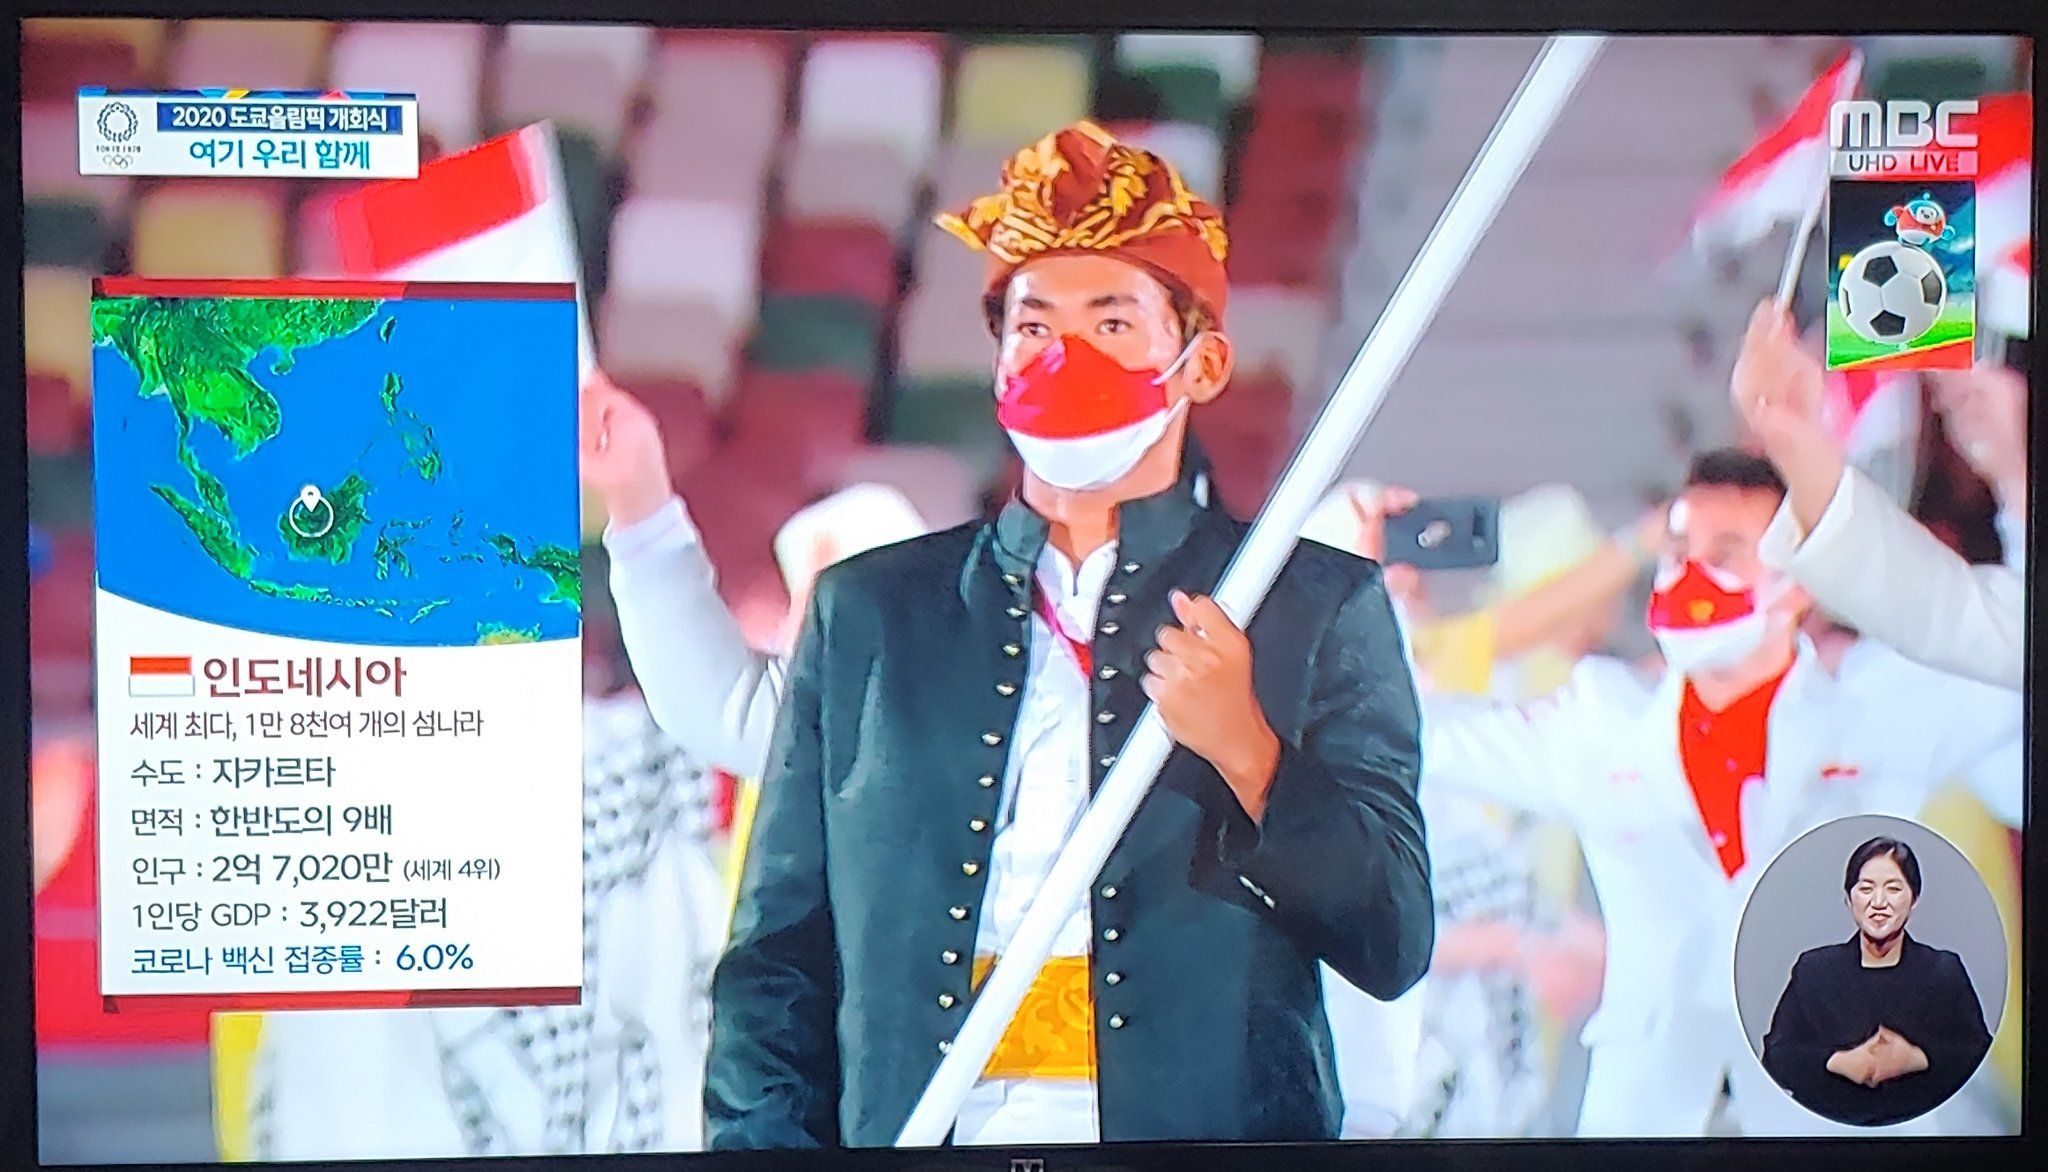 Stasiun televisi Korea Selatan MBC menggambarkan Indonesia sebagai negara kepulauan terbesar di dunia dengan penduduk terpadat ke-4 di dunia, PDB rendah, dan tingkat vaksinasi Covid-19 yang hanya 6% pada acara pembukaan Olimpiade Tokyo 2020. / Tangkapan layar MBC